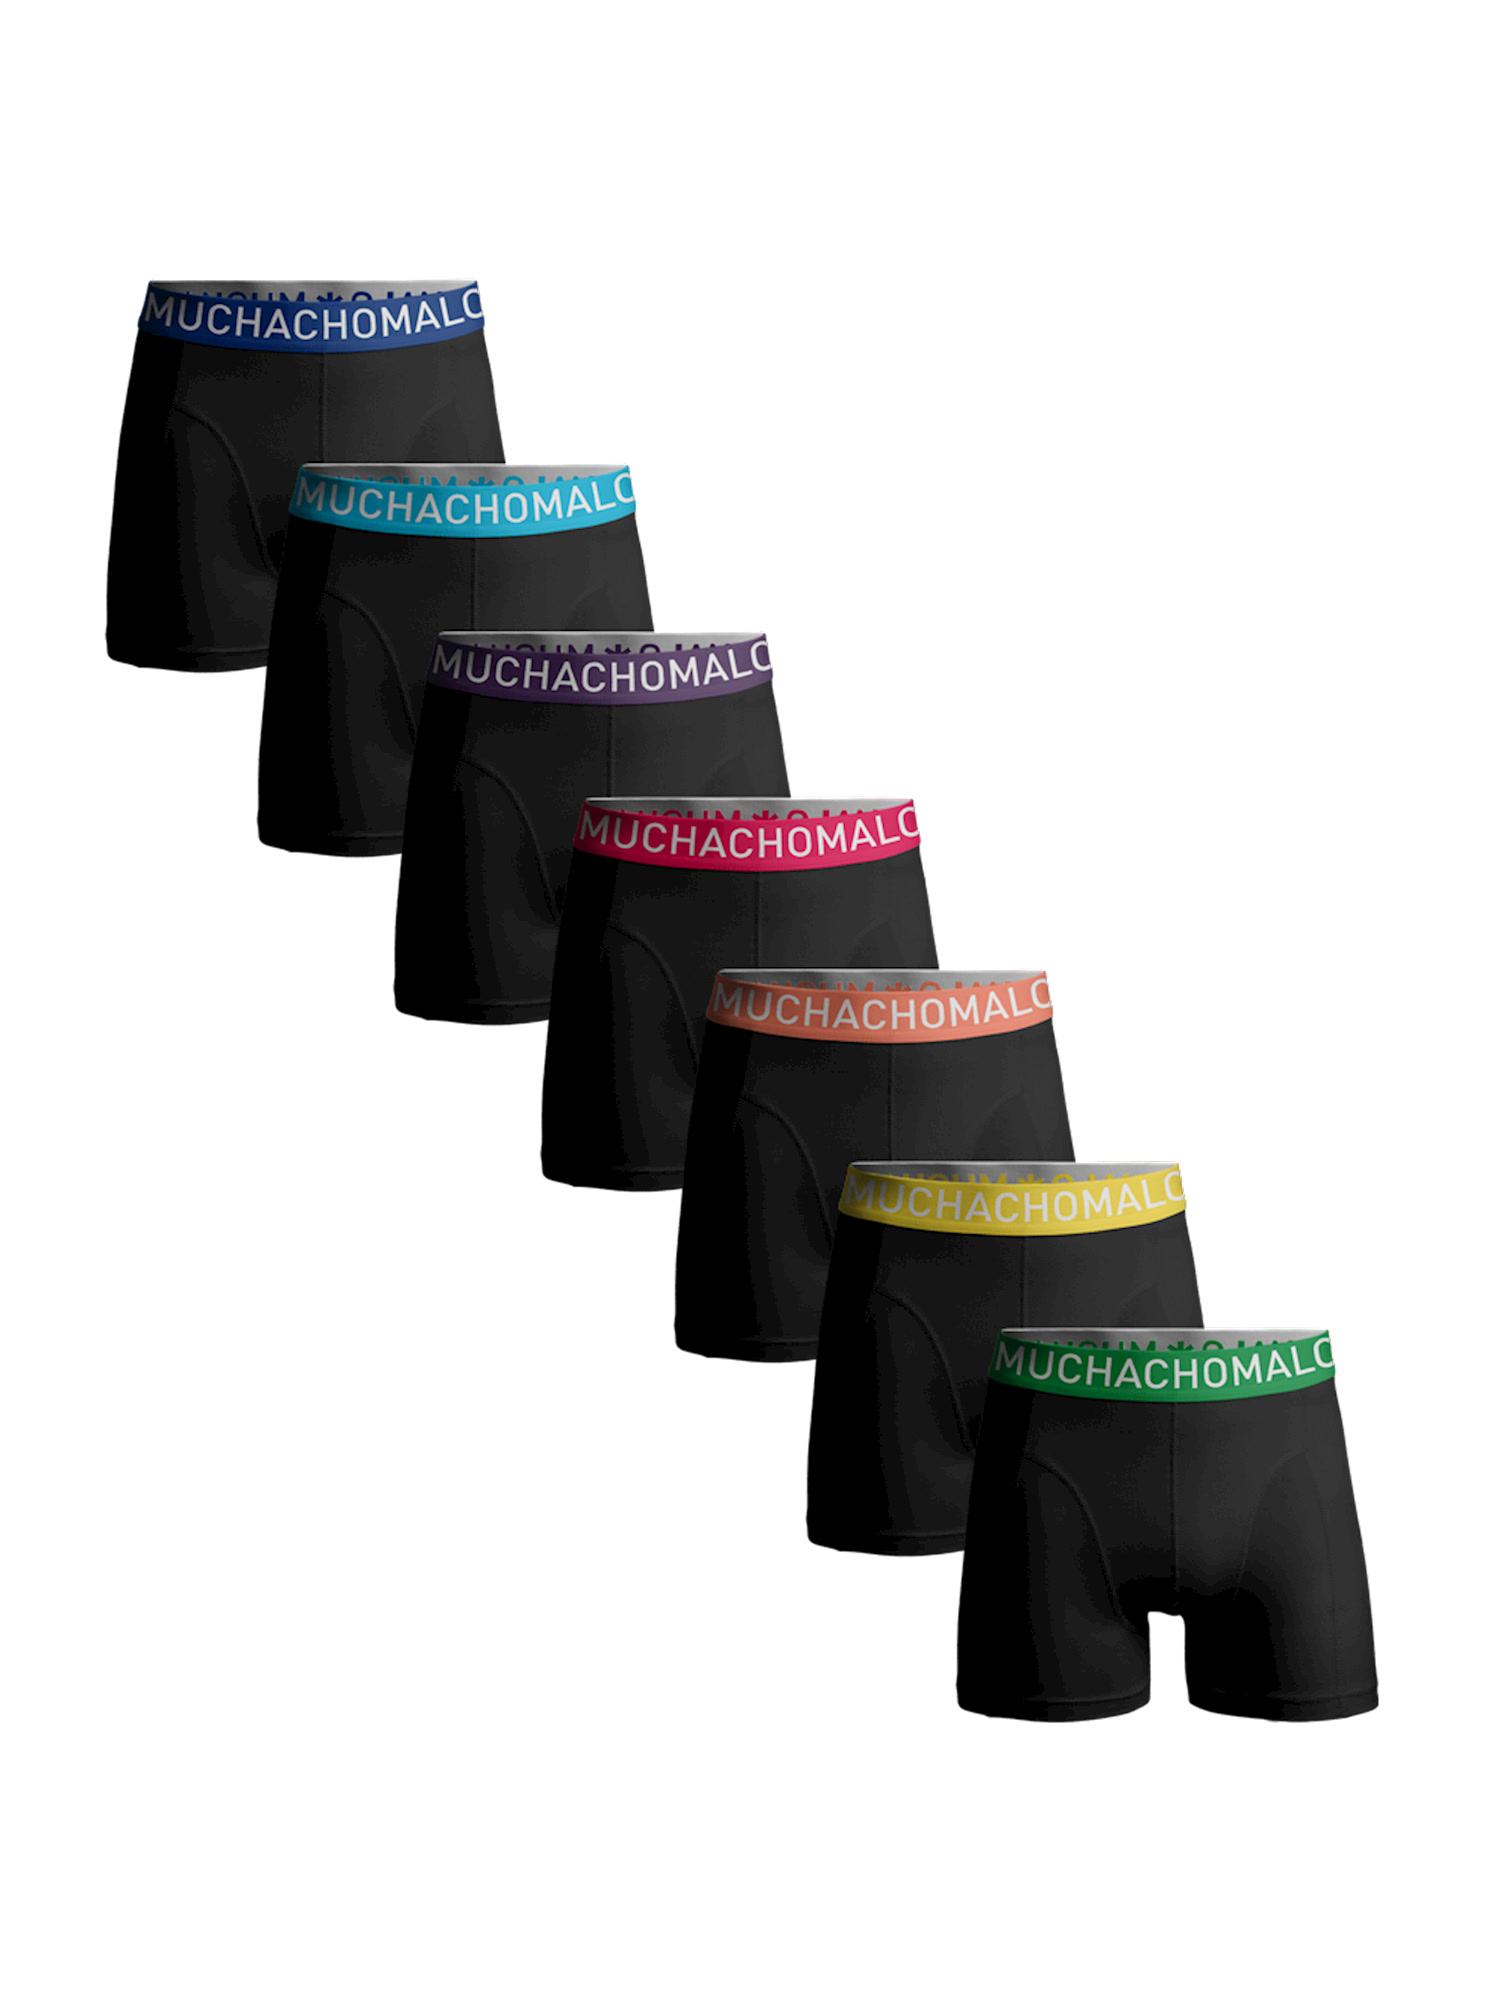 Боксеры Muchachomalo 7er-Set: Boxershorts, цвет Black/Black/Black/Black/Black/Black/Black